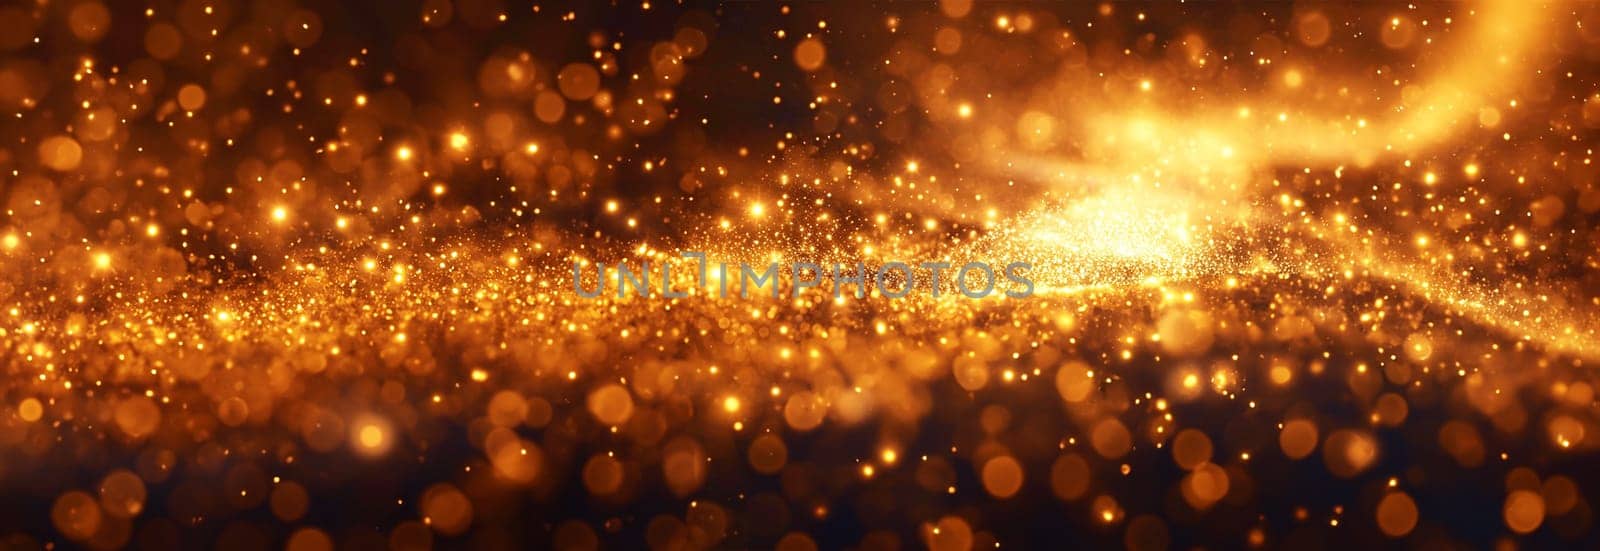 Web banner Gold sparkling glitter lights bokeh background. Abstract glitter lights background. de-focused Copy space. Festove, celebrationn design by Annebel146